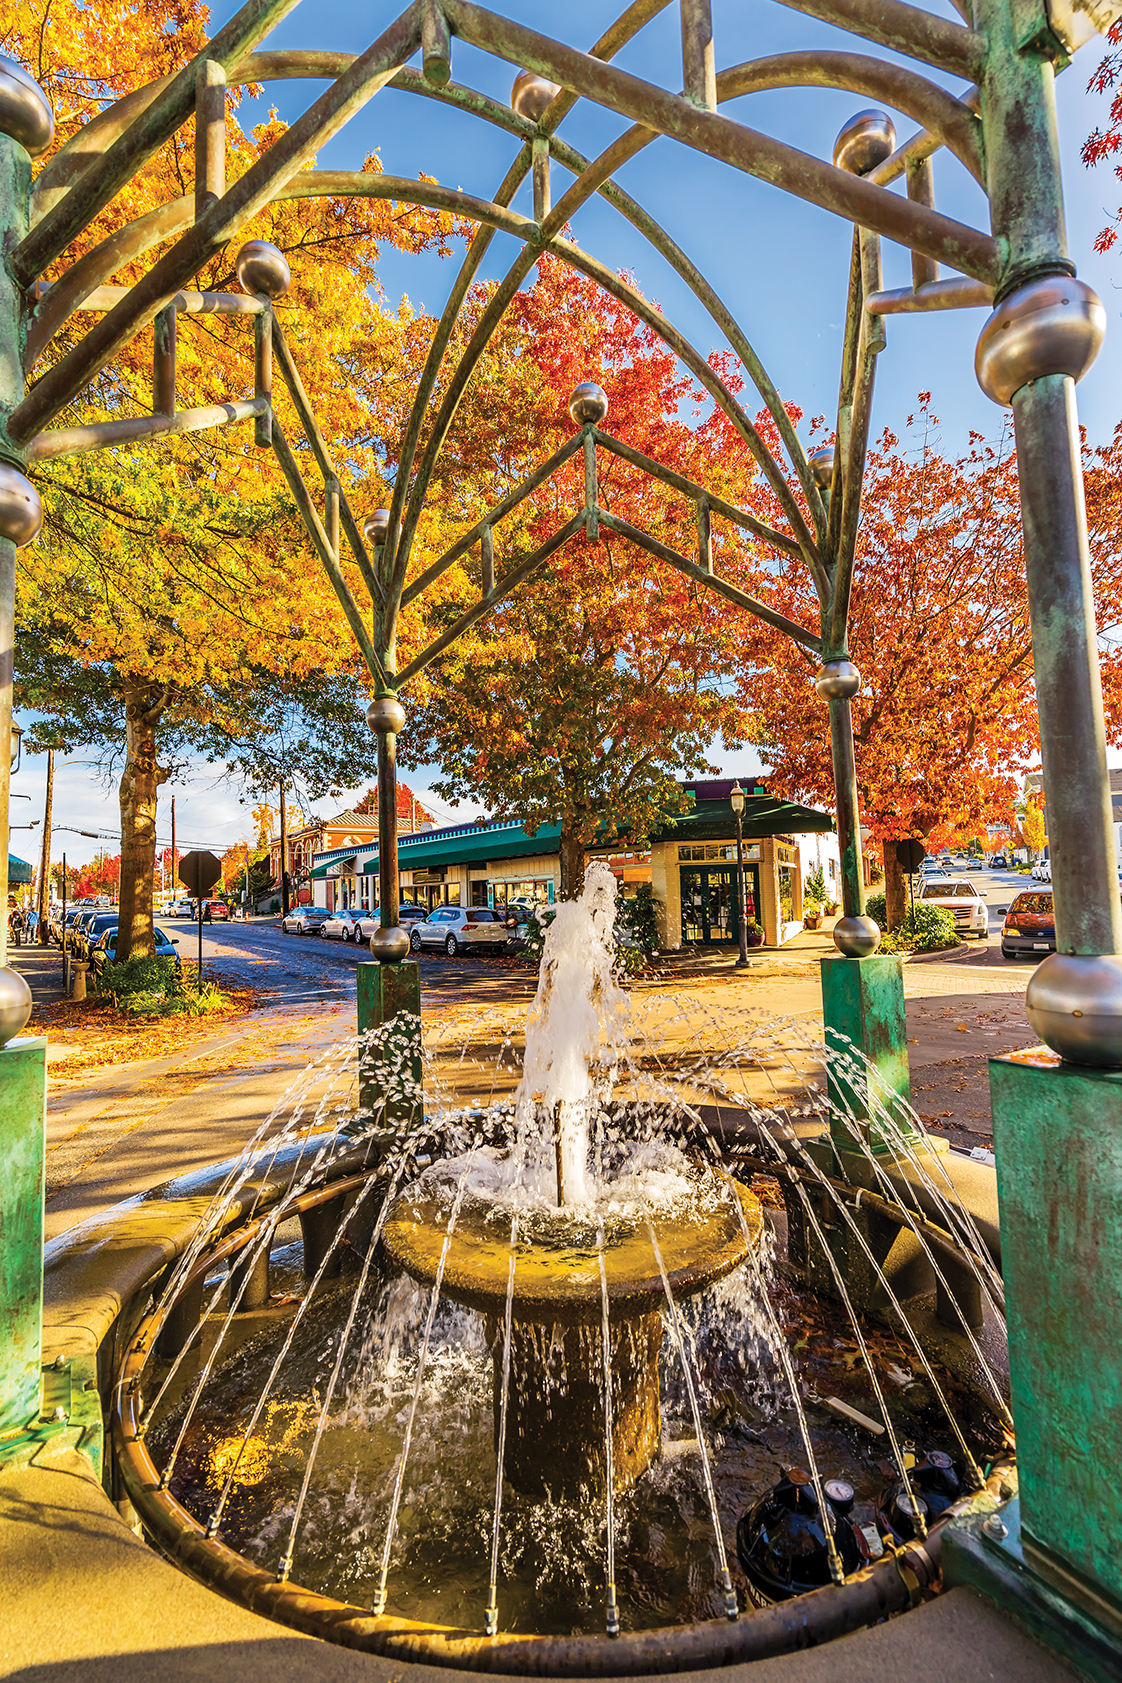 "Fountain in downtown Edmonds, Washington"